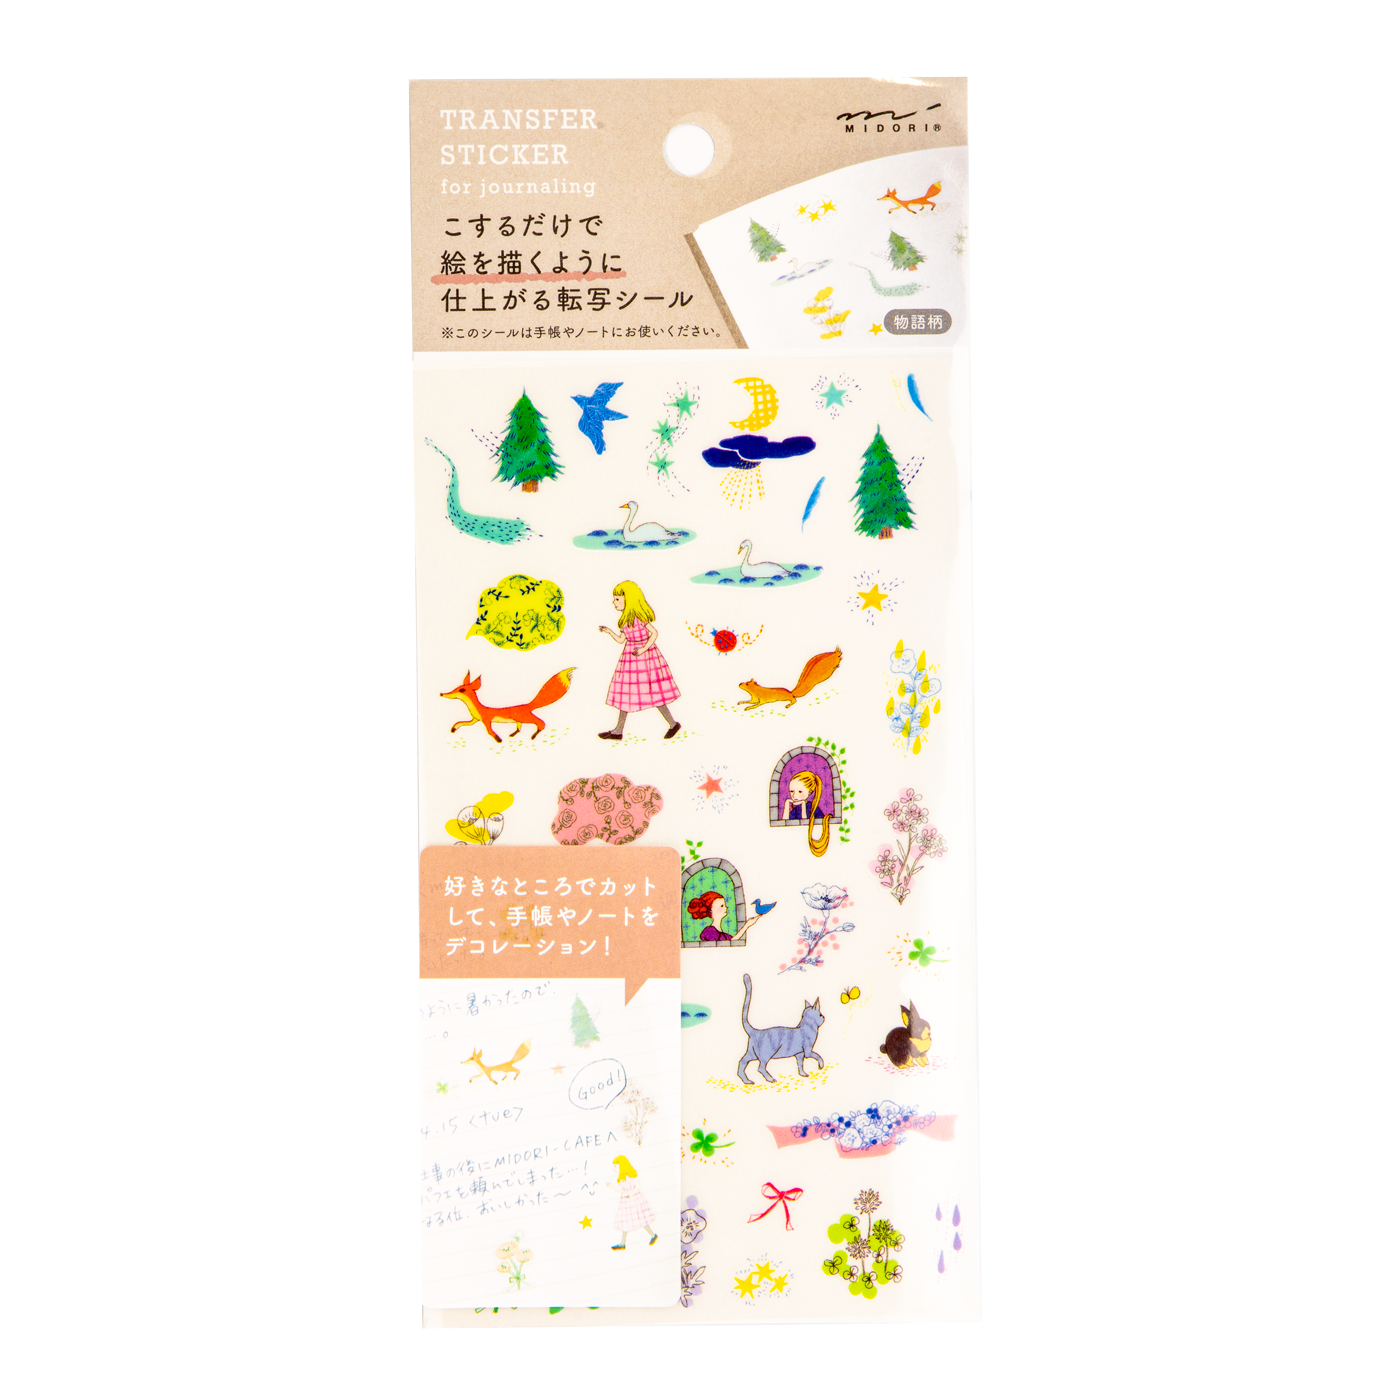 Midori Transfer Stickers - Storybook